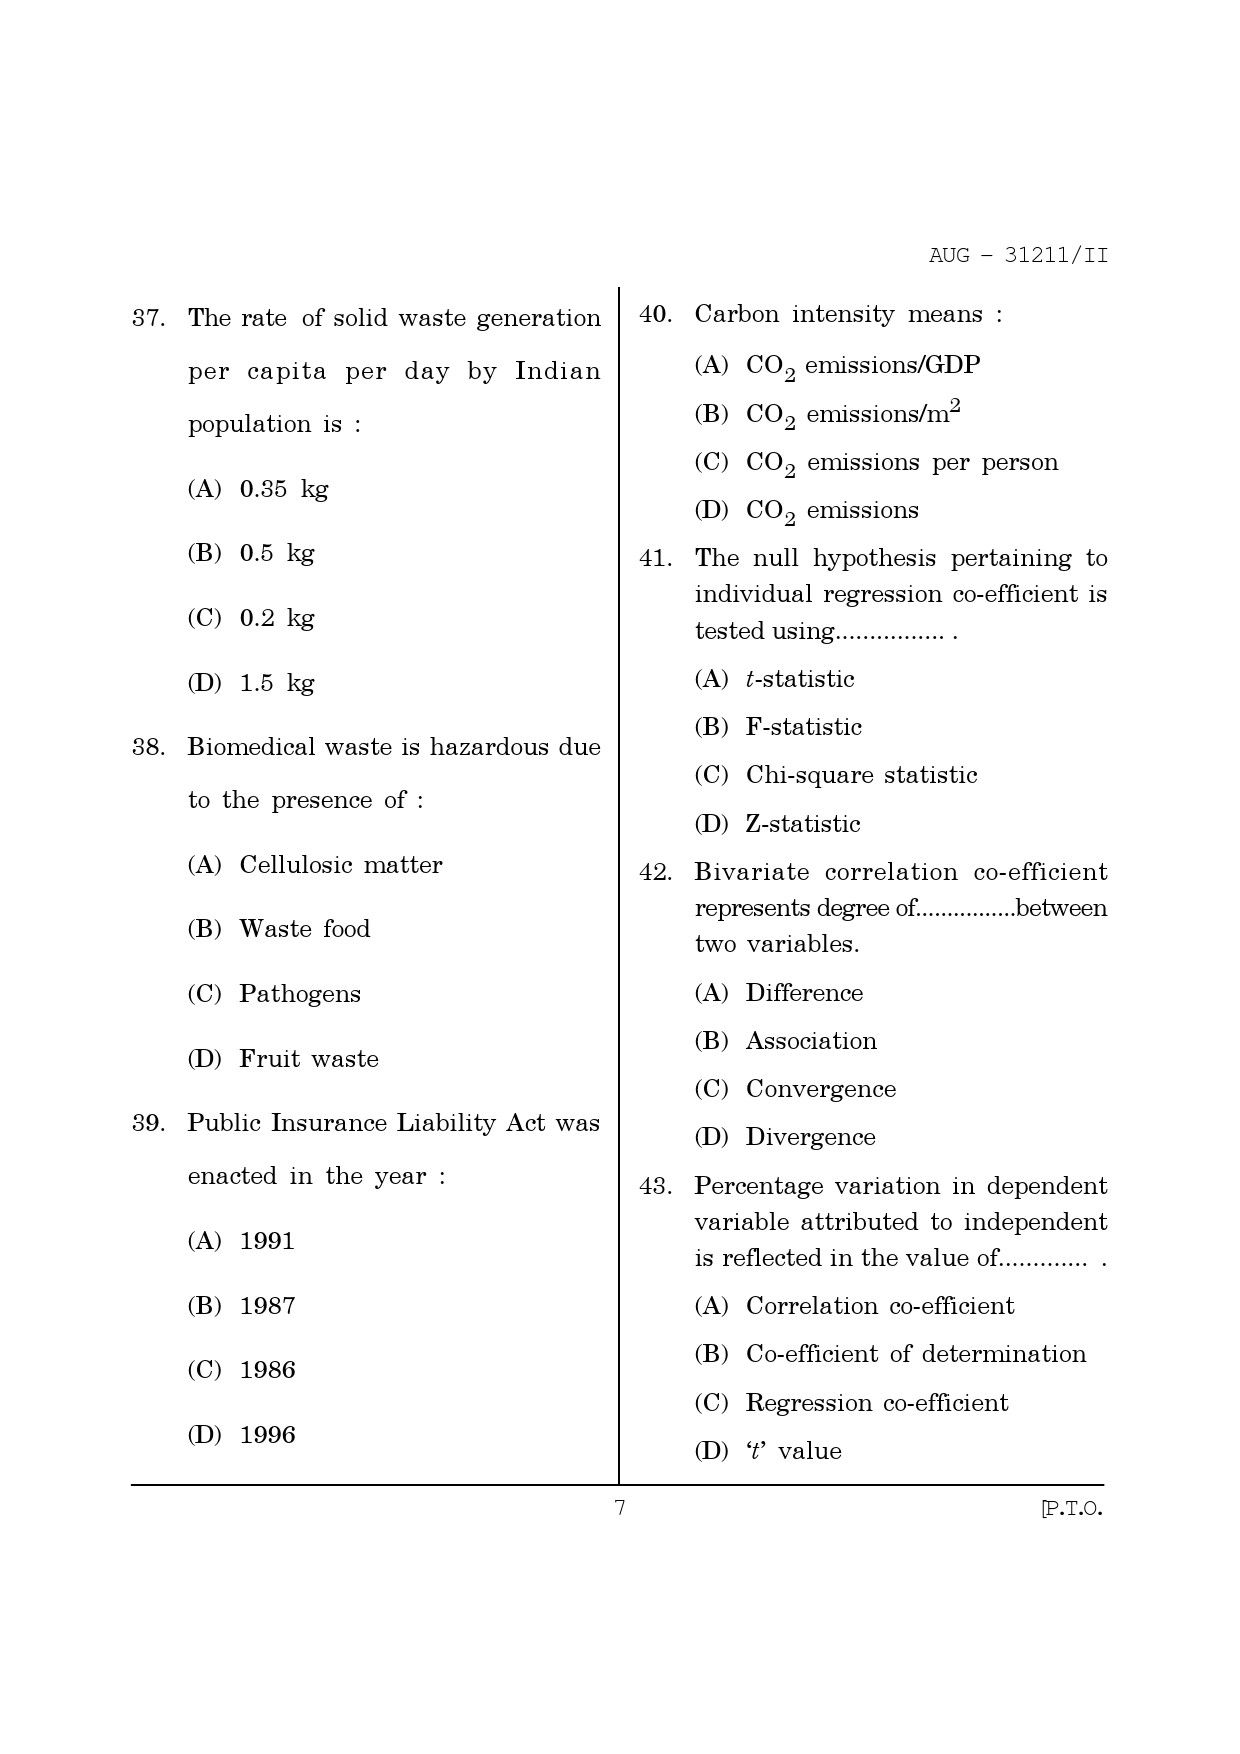 Maharashtra SET Environmental Sciences Question Paper II August 2011 7